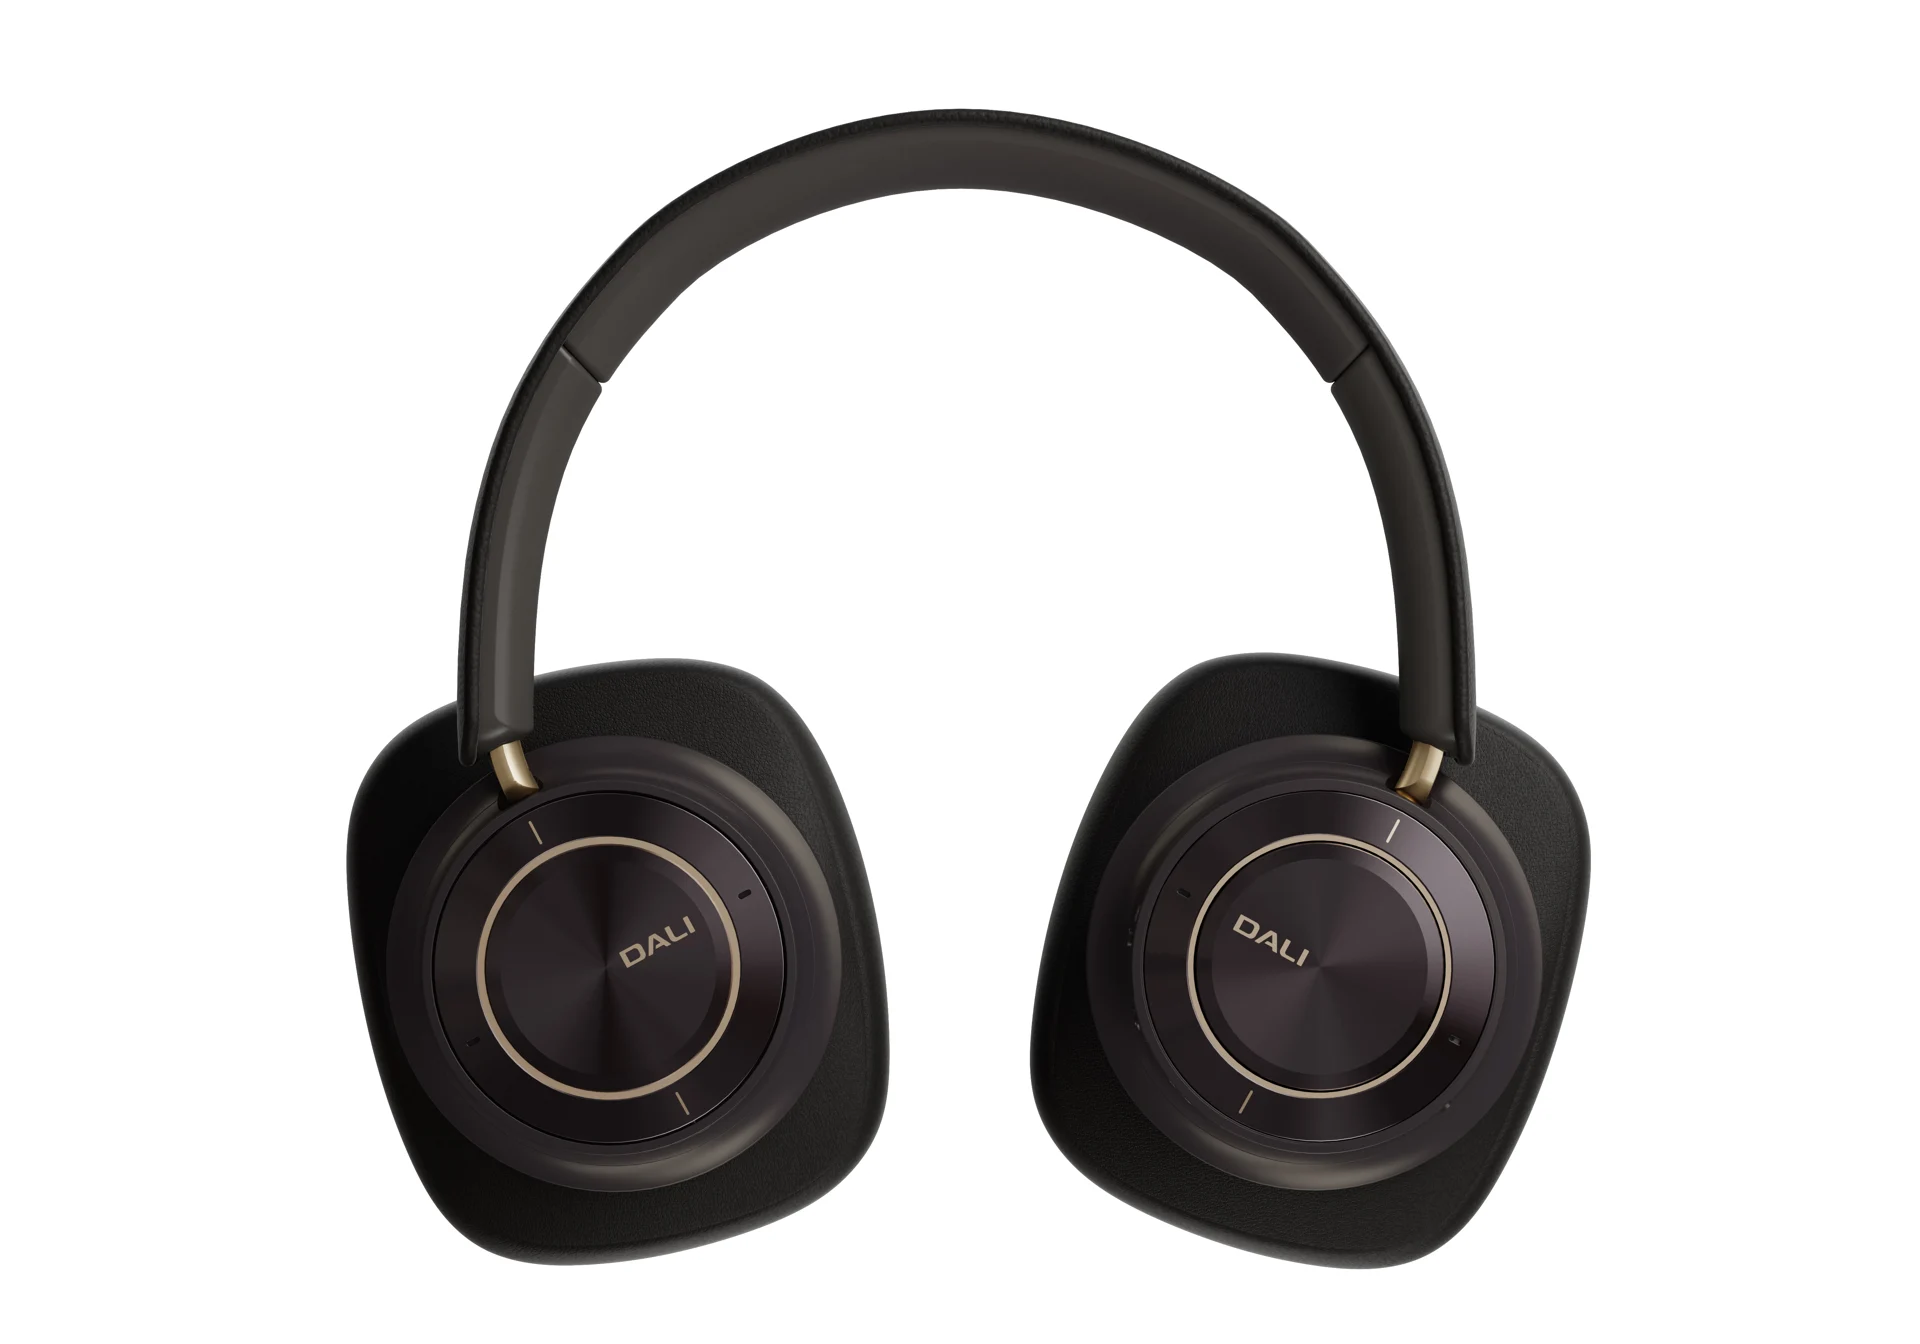 DALI announce IO-12 headphones